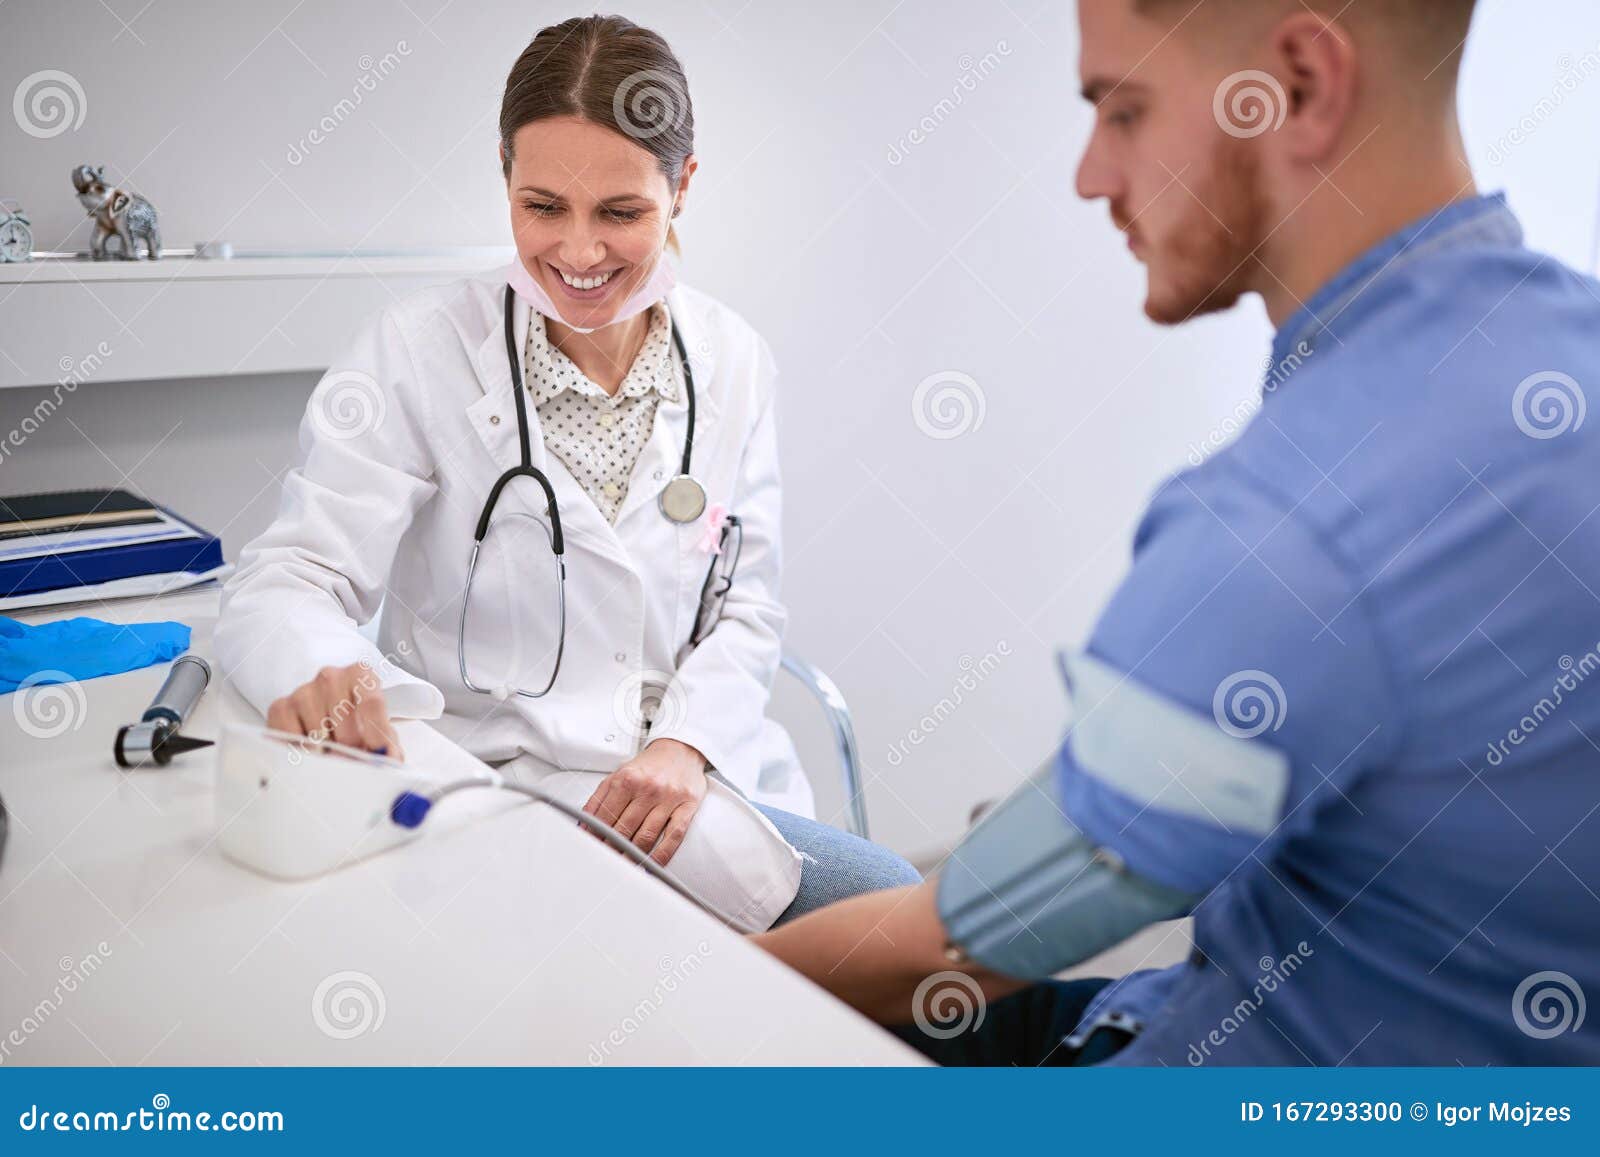 doctor measures blood pressure to patient